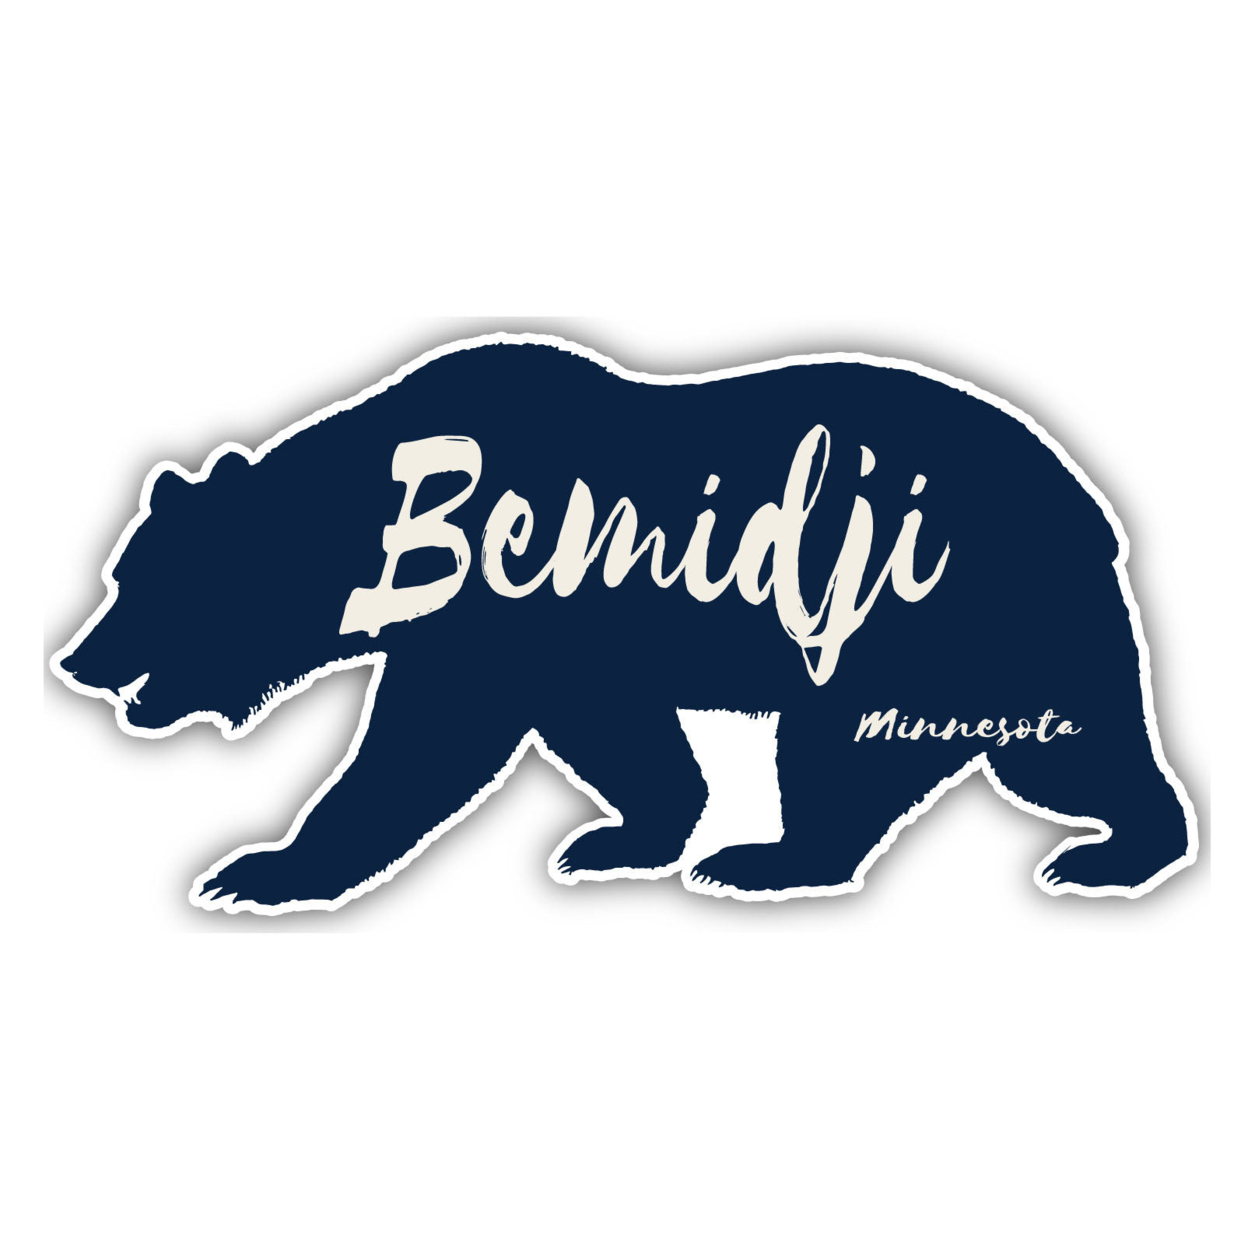 Bemidji Minnesota Souvenir Decorative Stickers (Choose Theme And Size) - Single Unit, 6-Inch, Tent